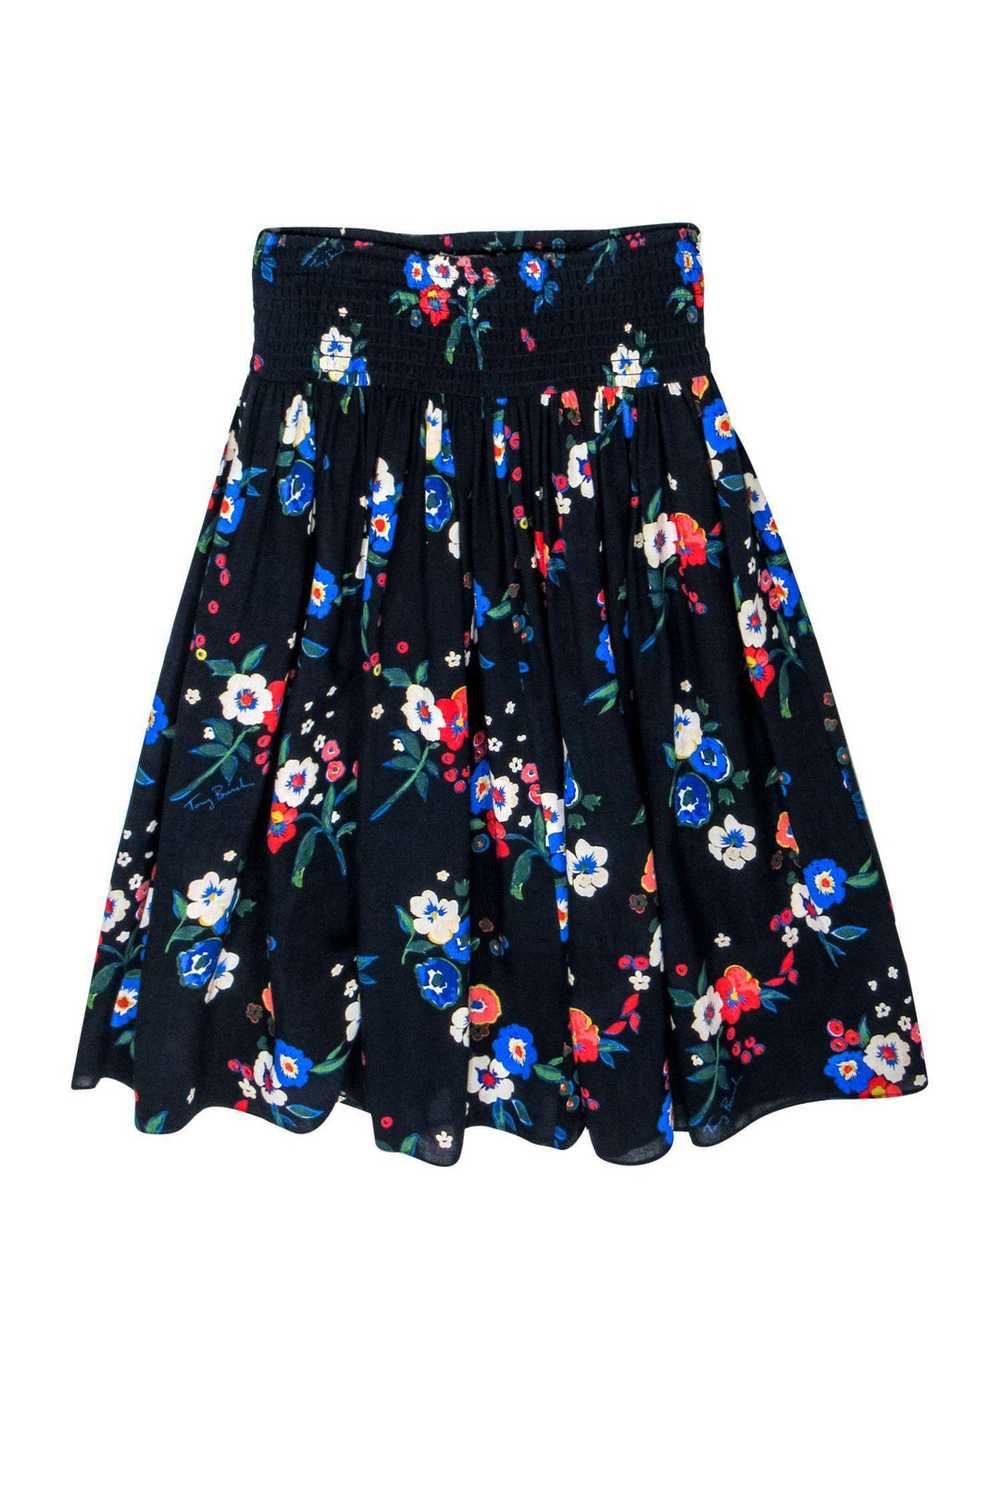 Tory Burch - Navy Floral Smocked Waist Skirt Sz 4 - image 1